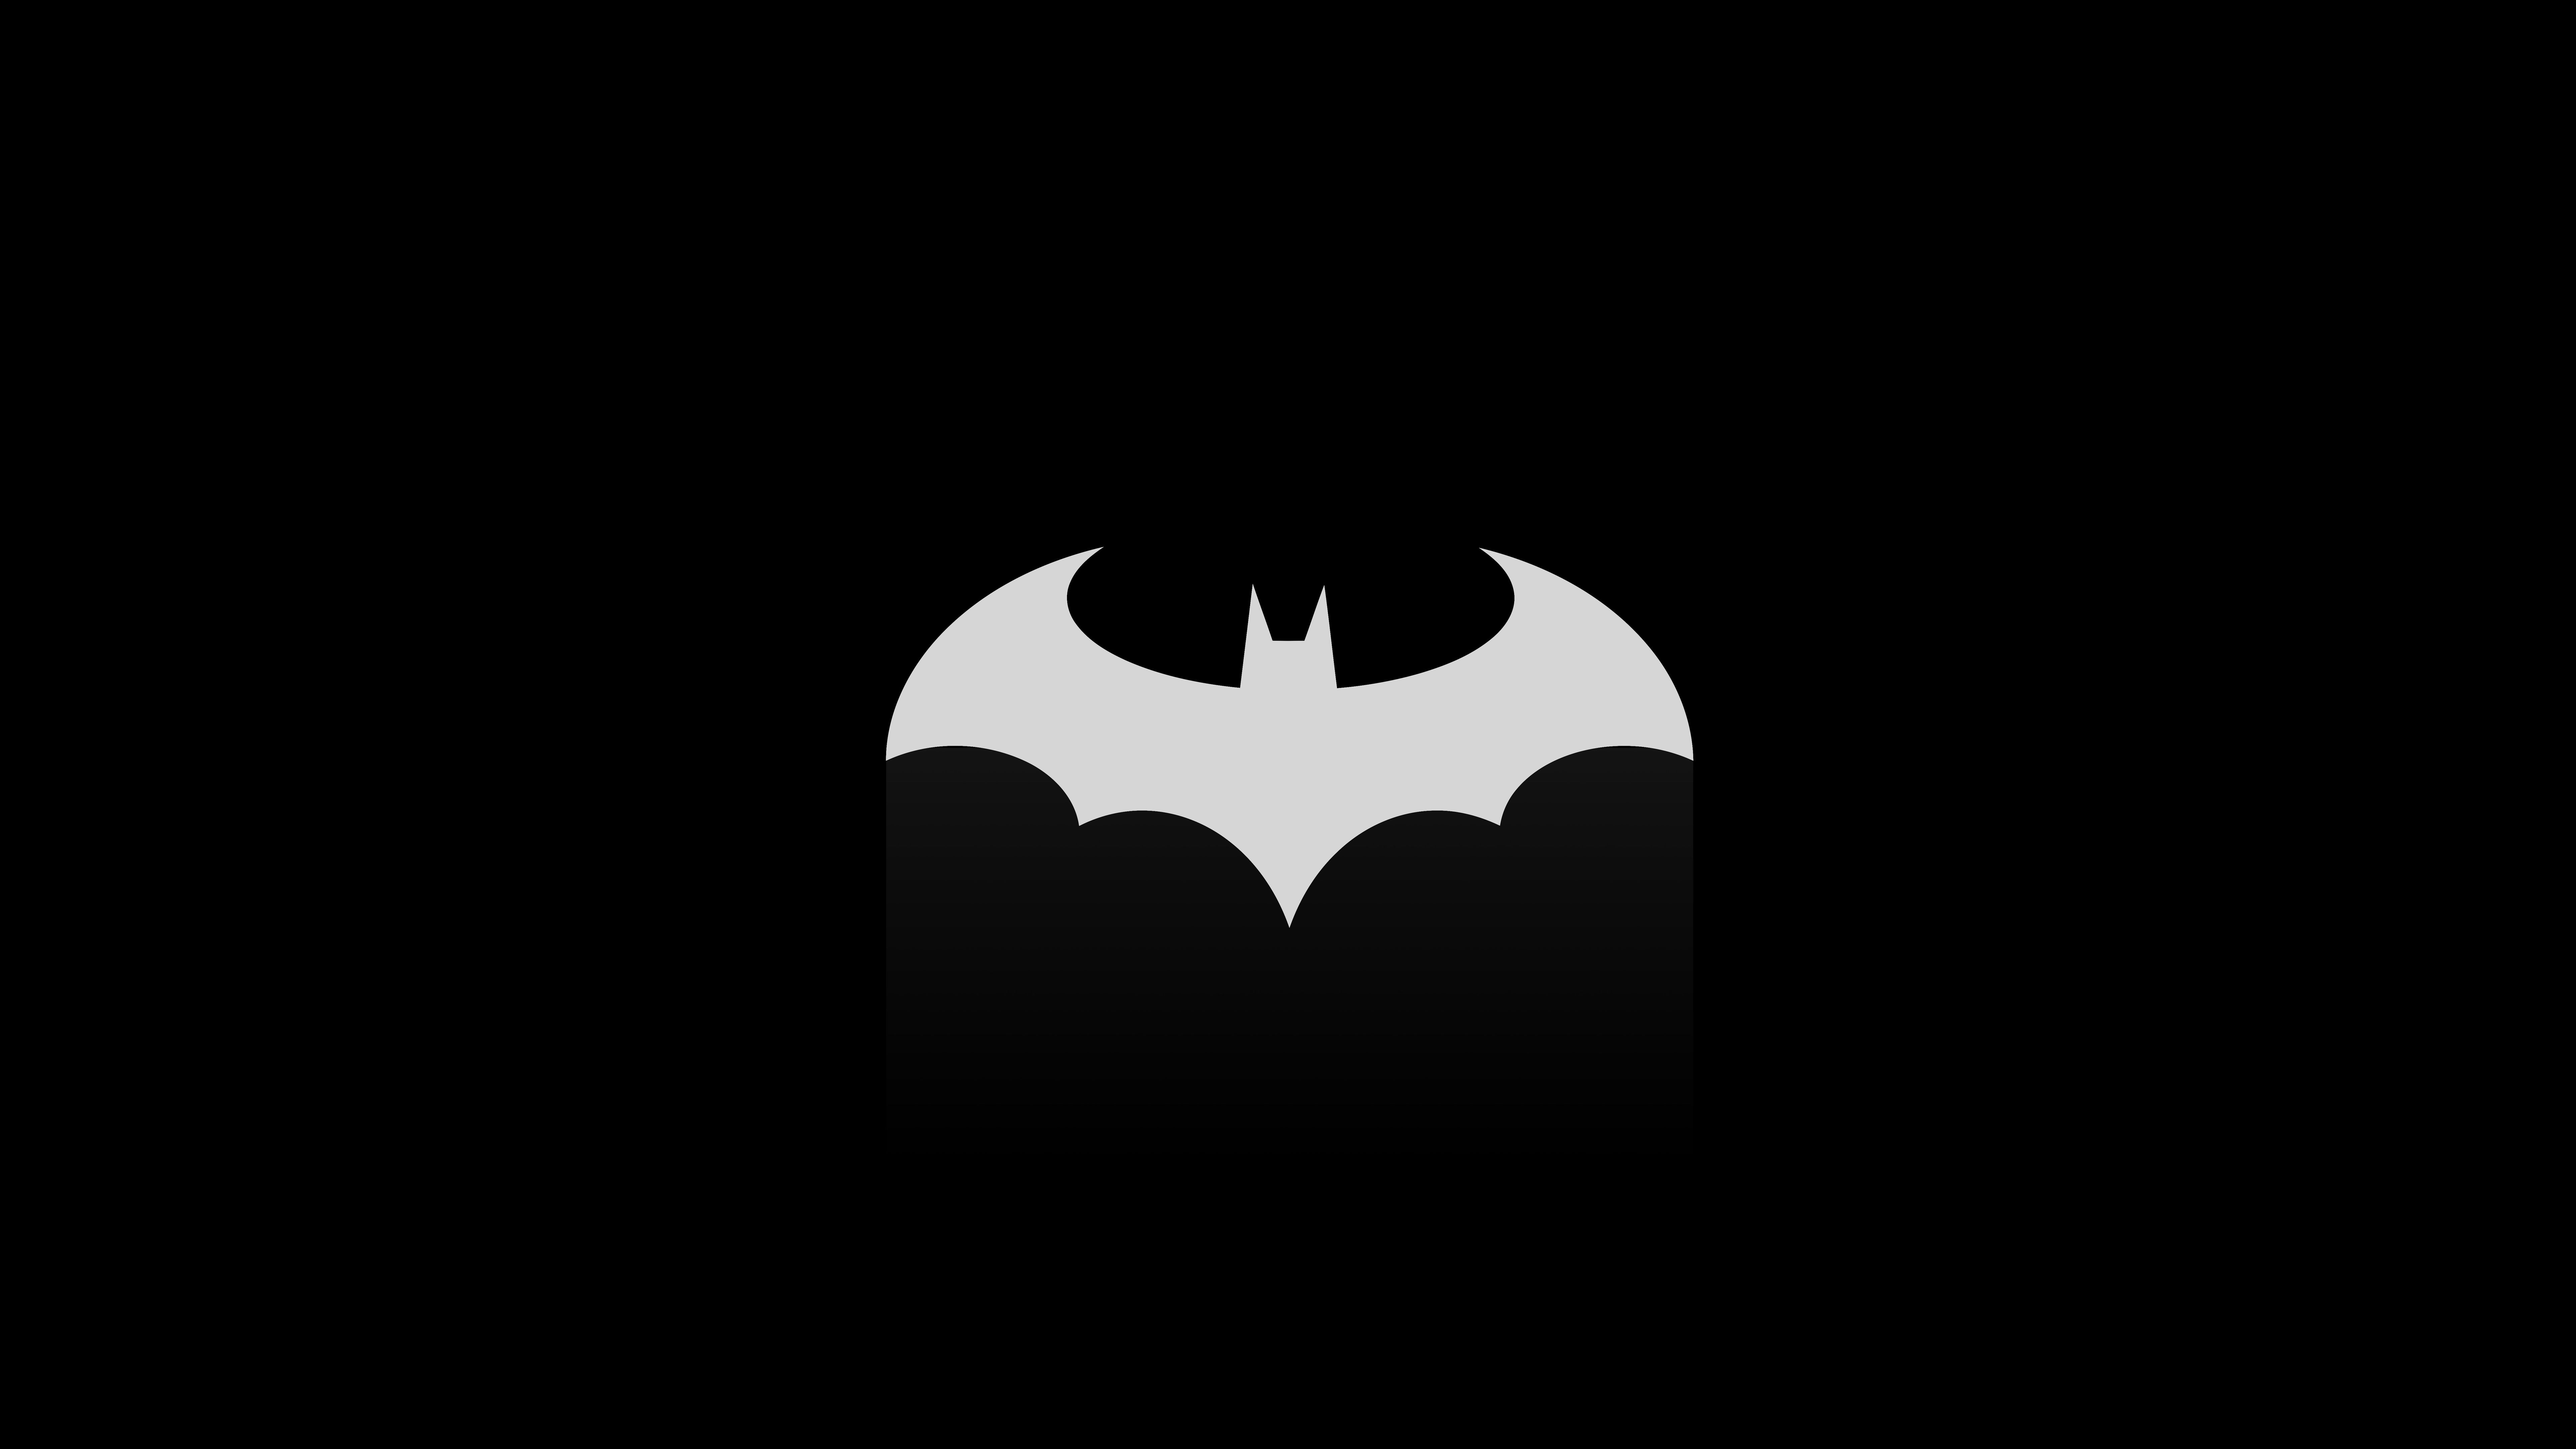 Batman Logo 10k 8k HD 4k Wallpaper, Image, Background, Photo and Picture